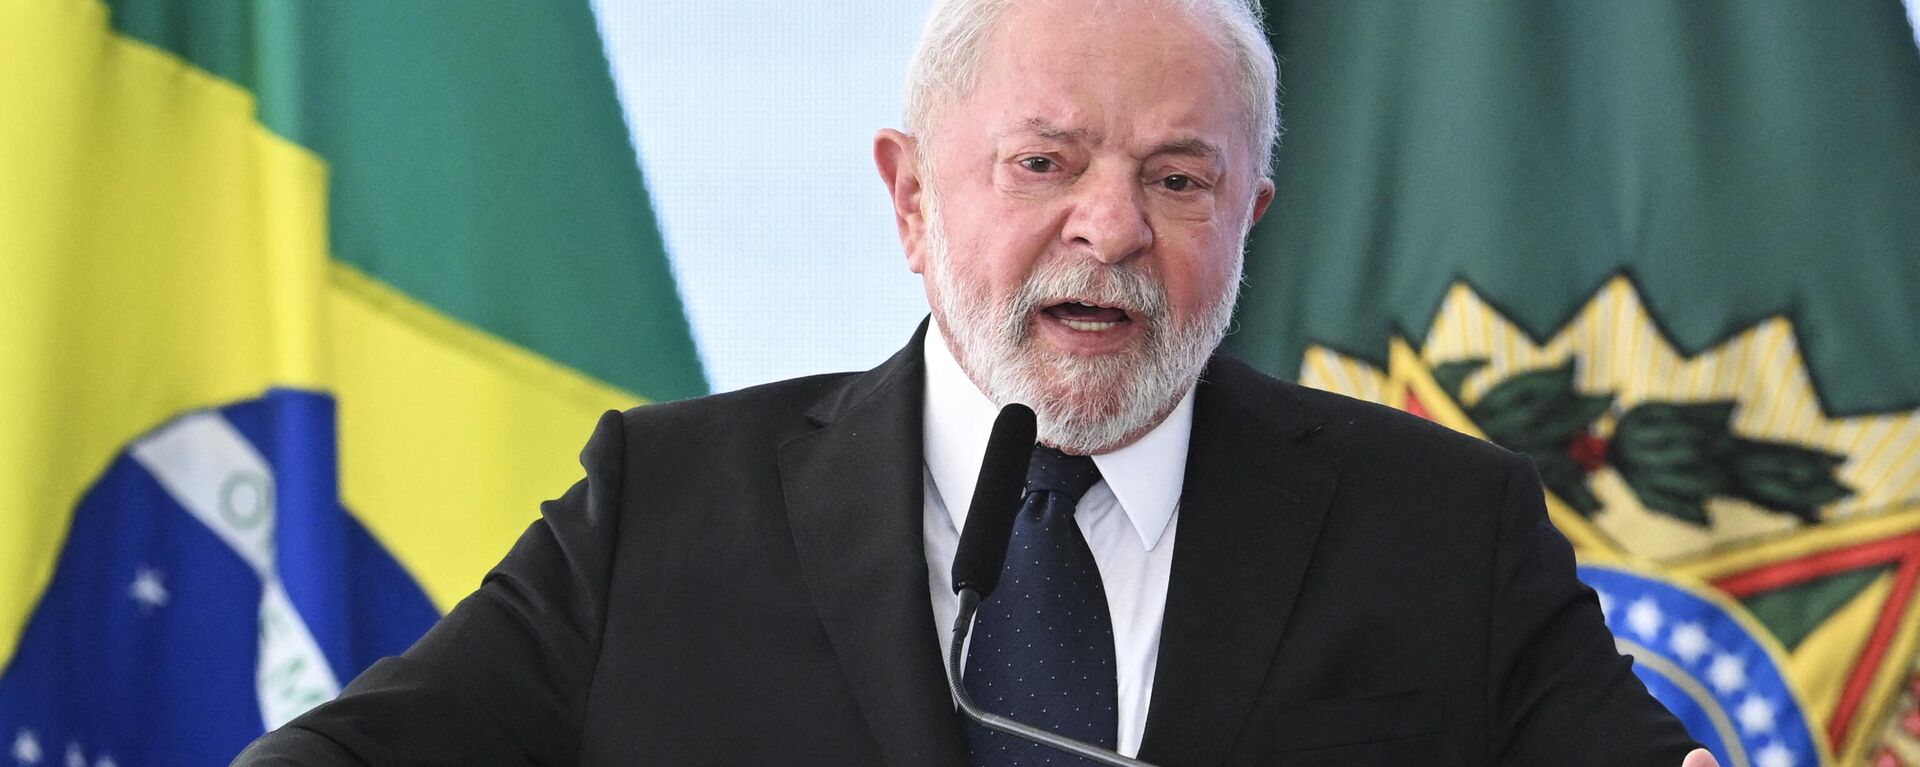 Brazilian President Luiz Inacio Lula da Silva delivers a speech during the launching ceremony of the National Public Security Program (PRONASCI) at the Planalto Palace in Brasilia on March 15, 2023 - Sputnik International, 1920, 07.05.2023